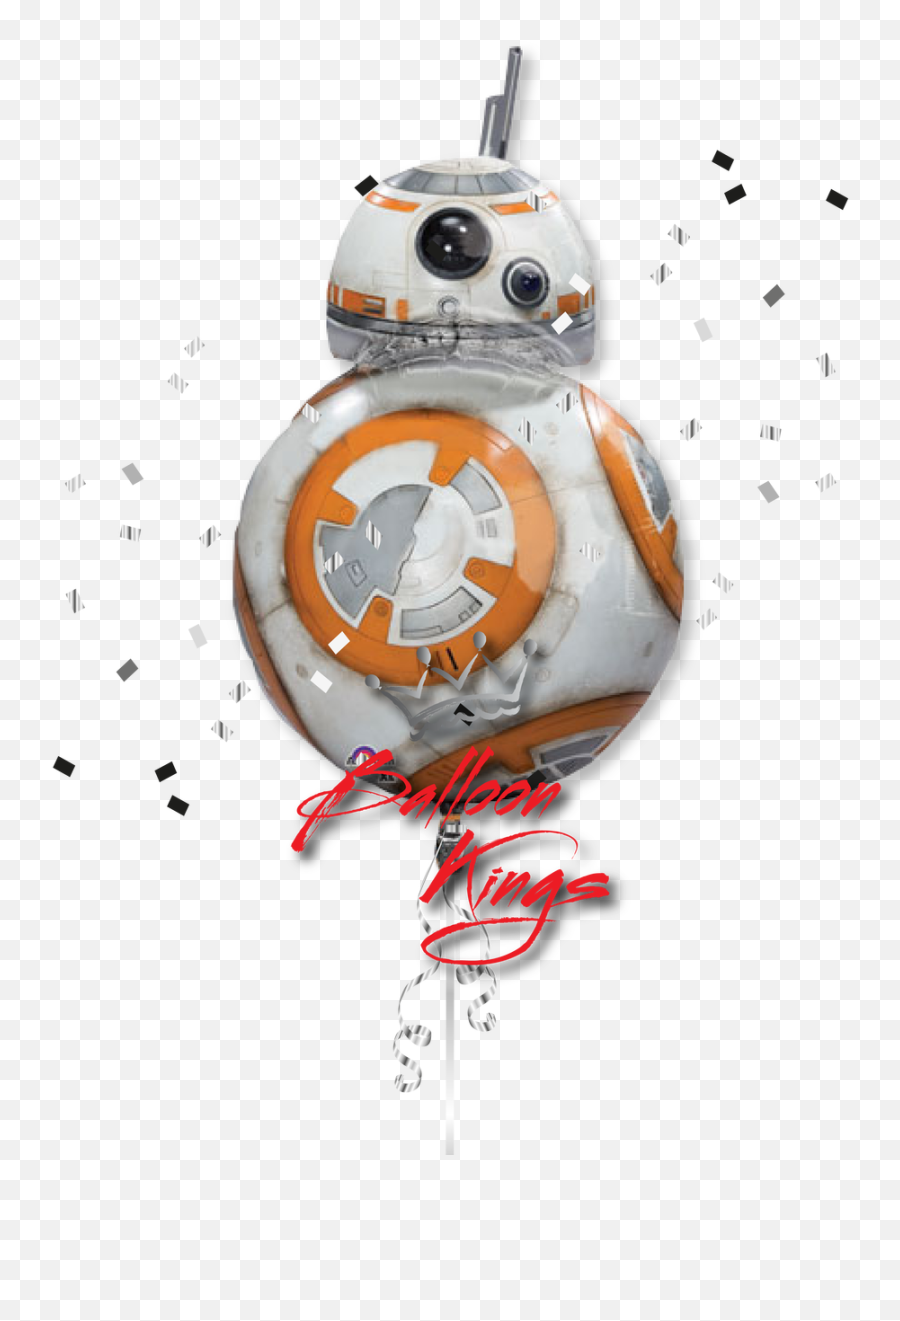 Bb8 - Star Wars Balloons Emoji,Bb8 Emoji